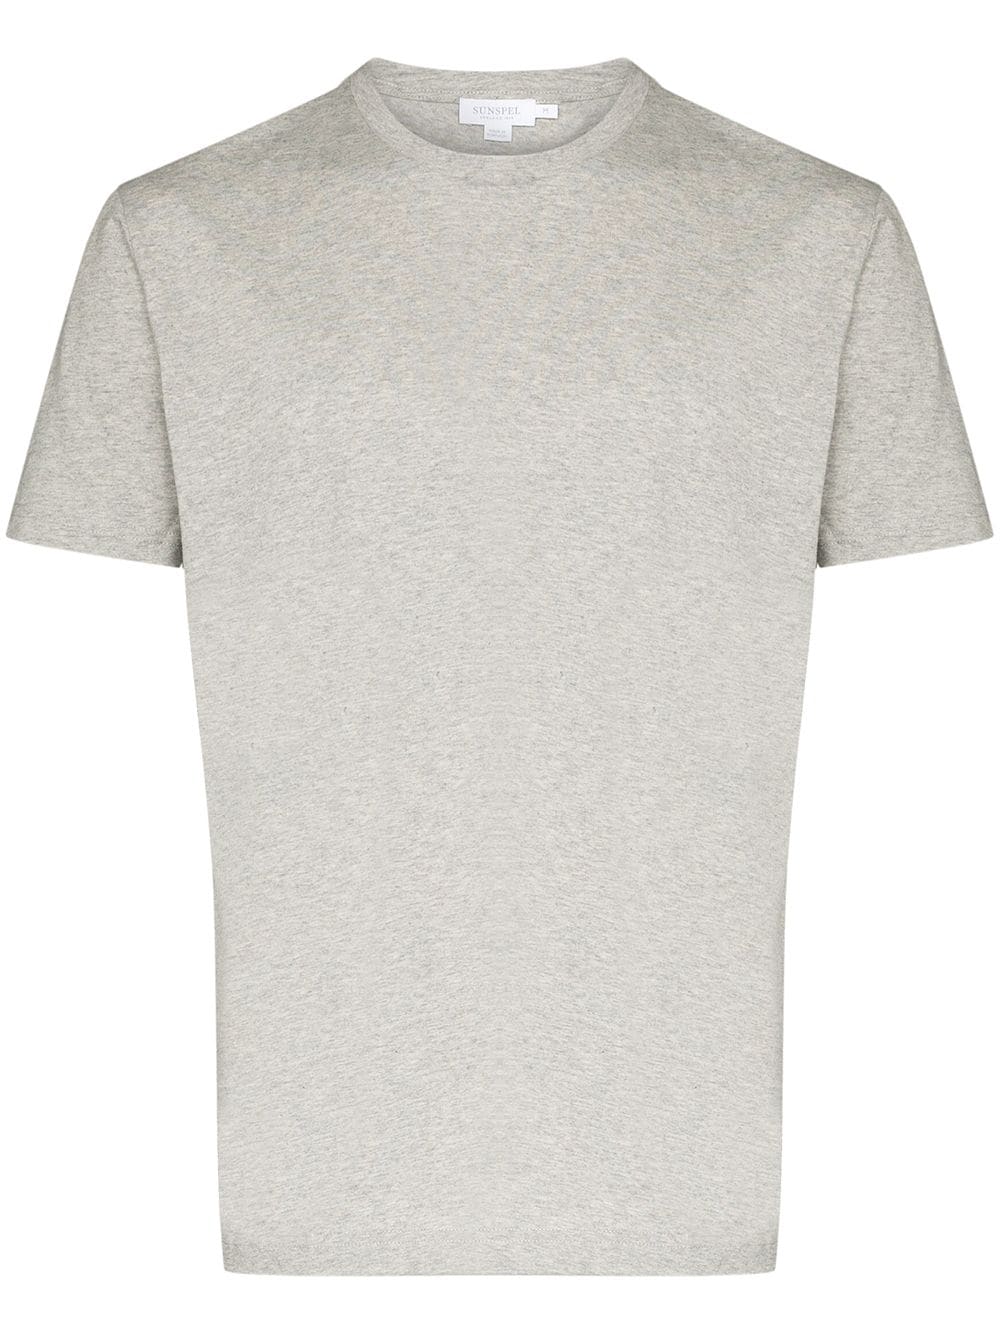 H&M T-Shirt light grey flecked Fashion Shirts T-Shirts 